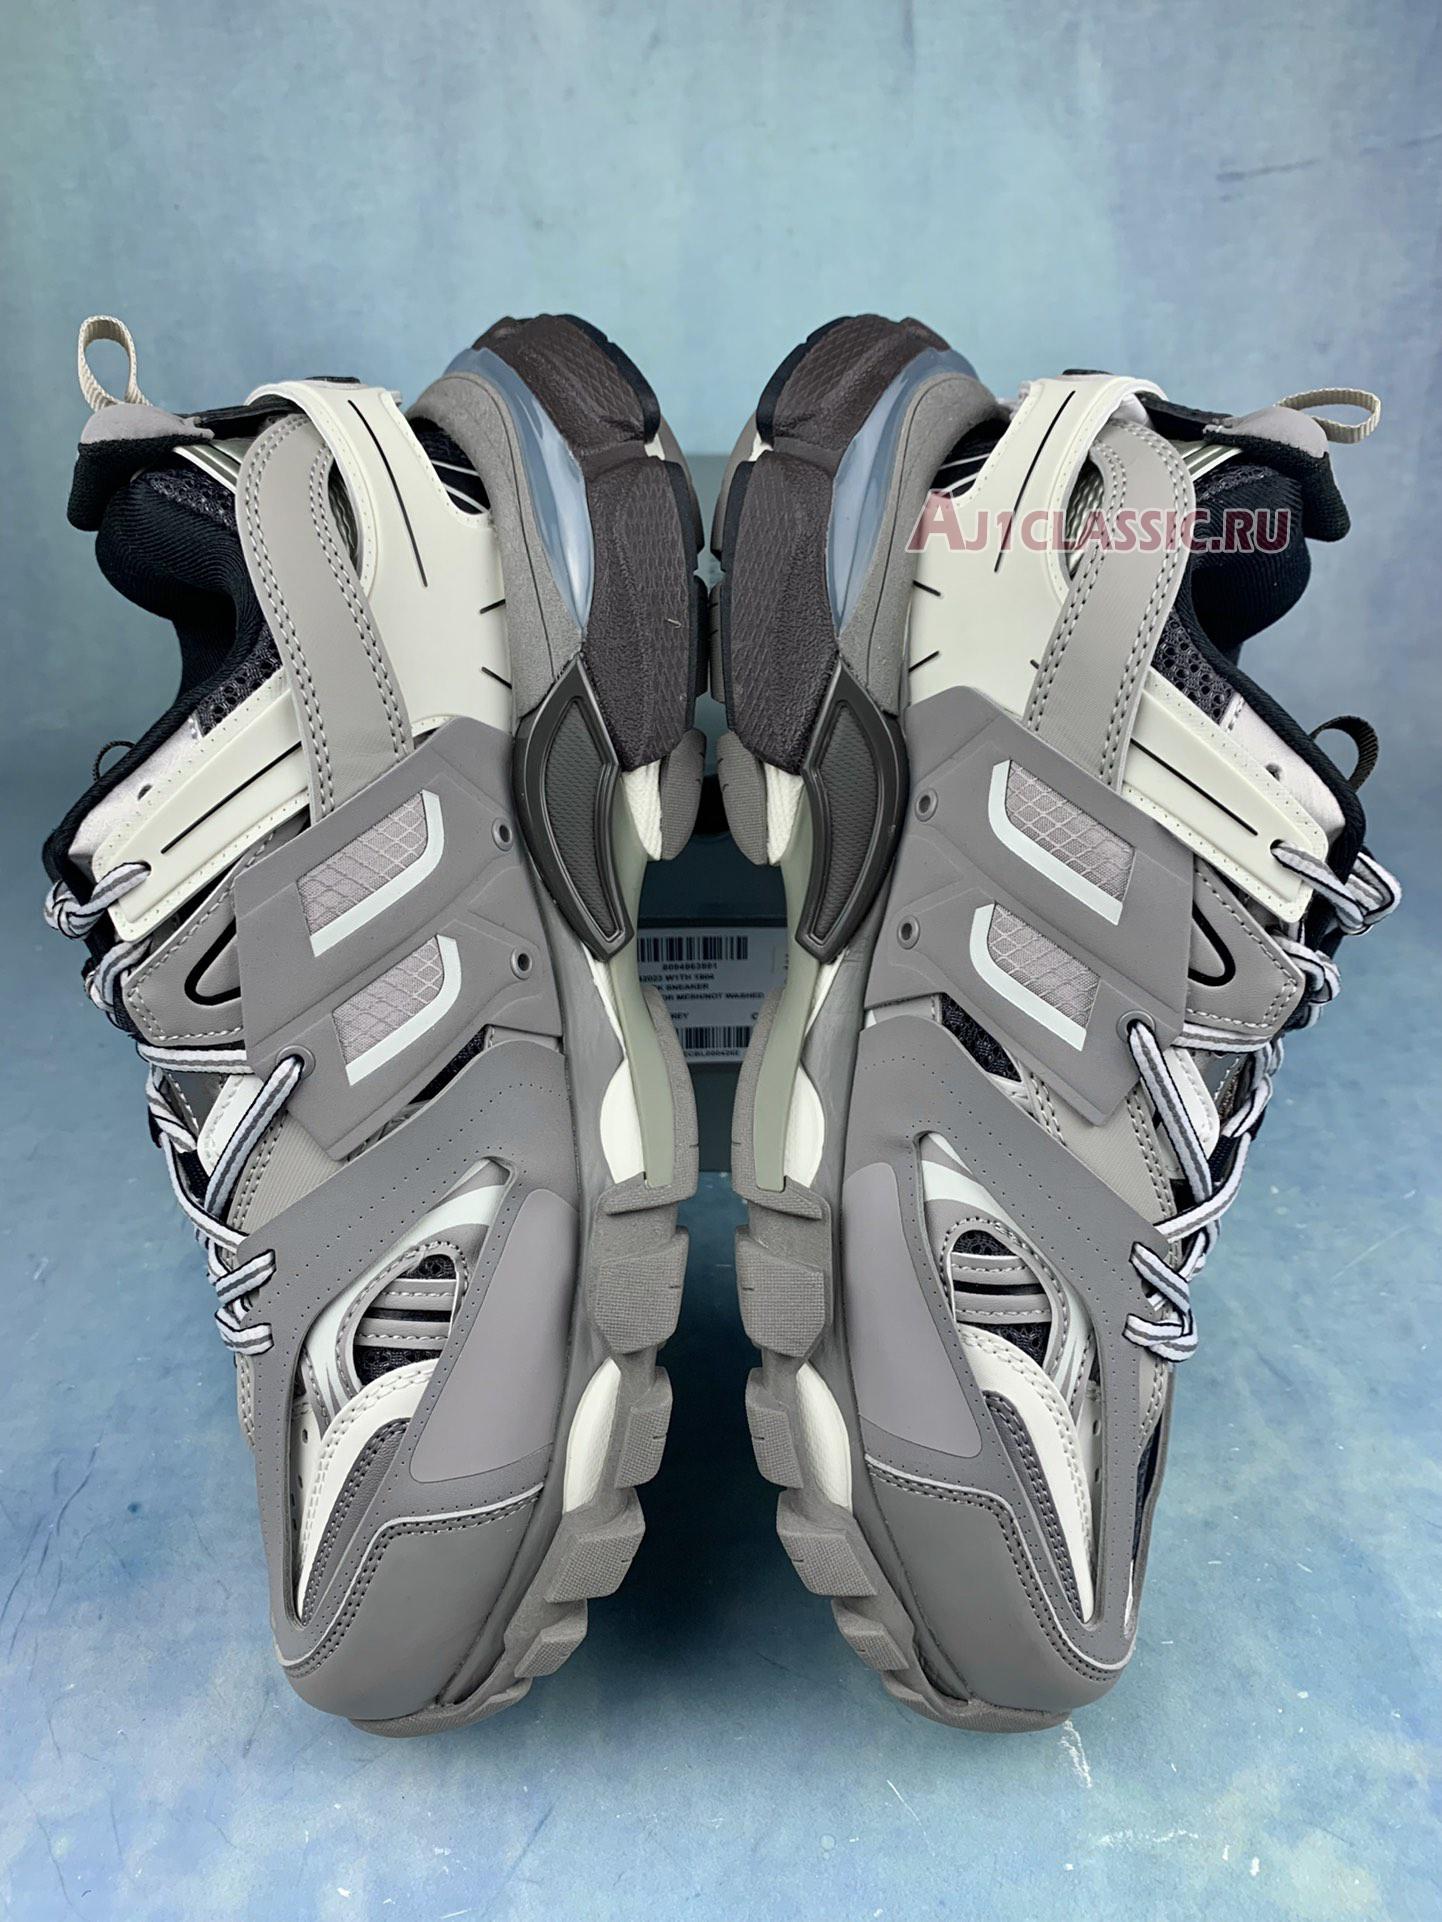 Balenciaga Track Sneaker "Grey White" 542023 W1GB7 1214